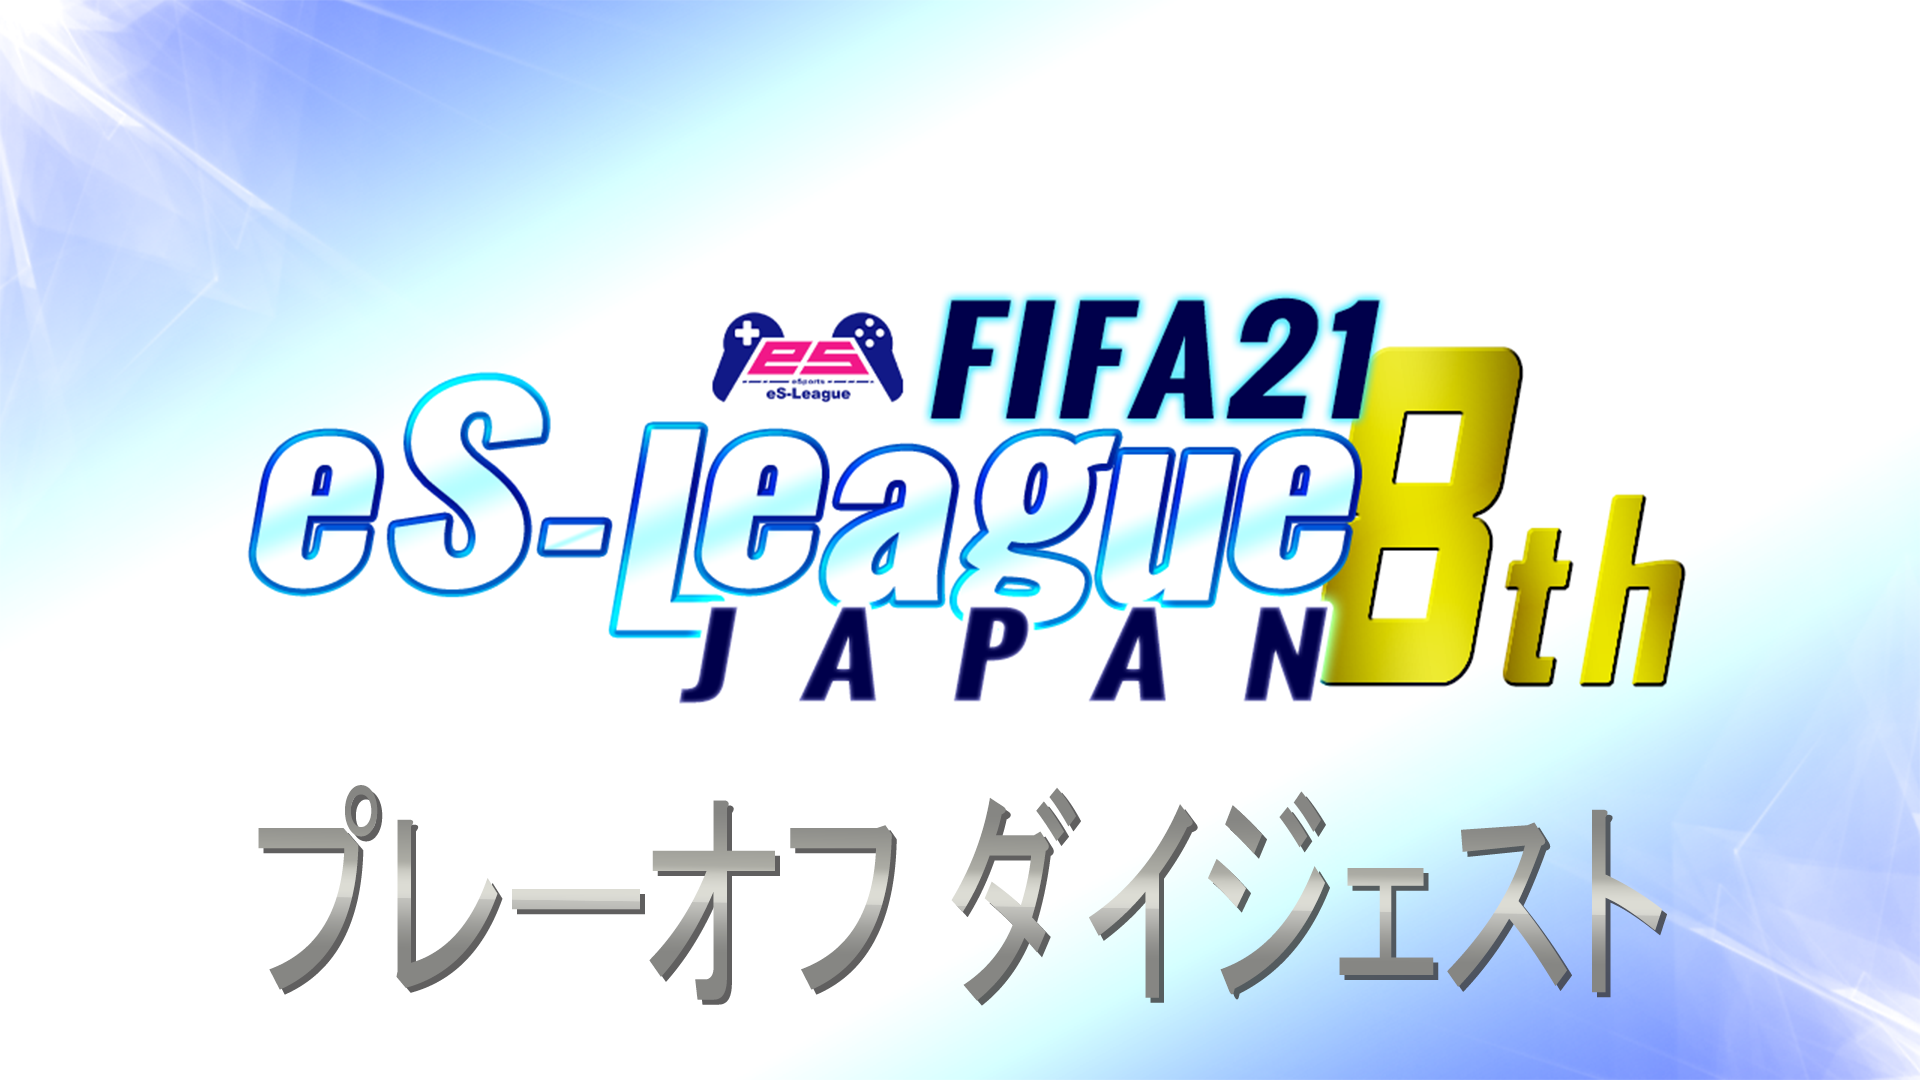 FIFA21 eS-League JAPAN 8th プレーオフ ダイジェストを公開致しました！